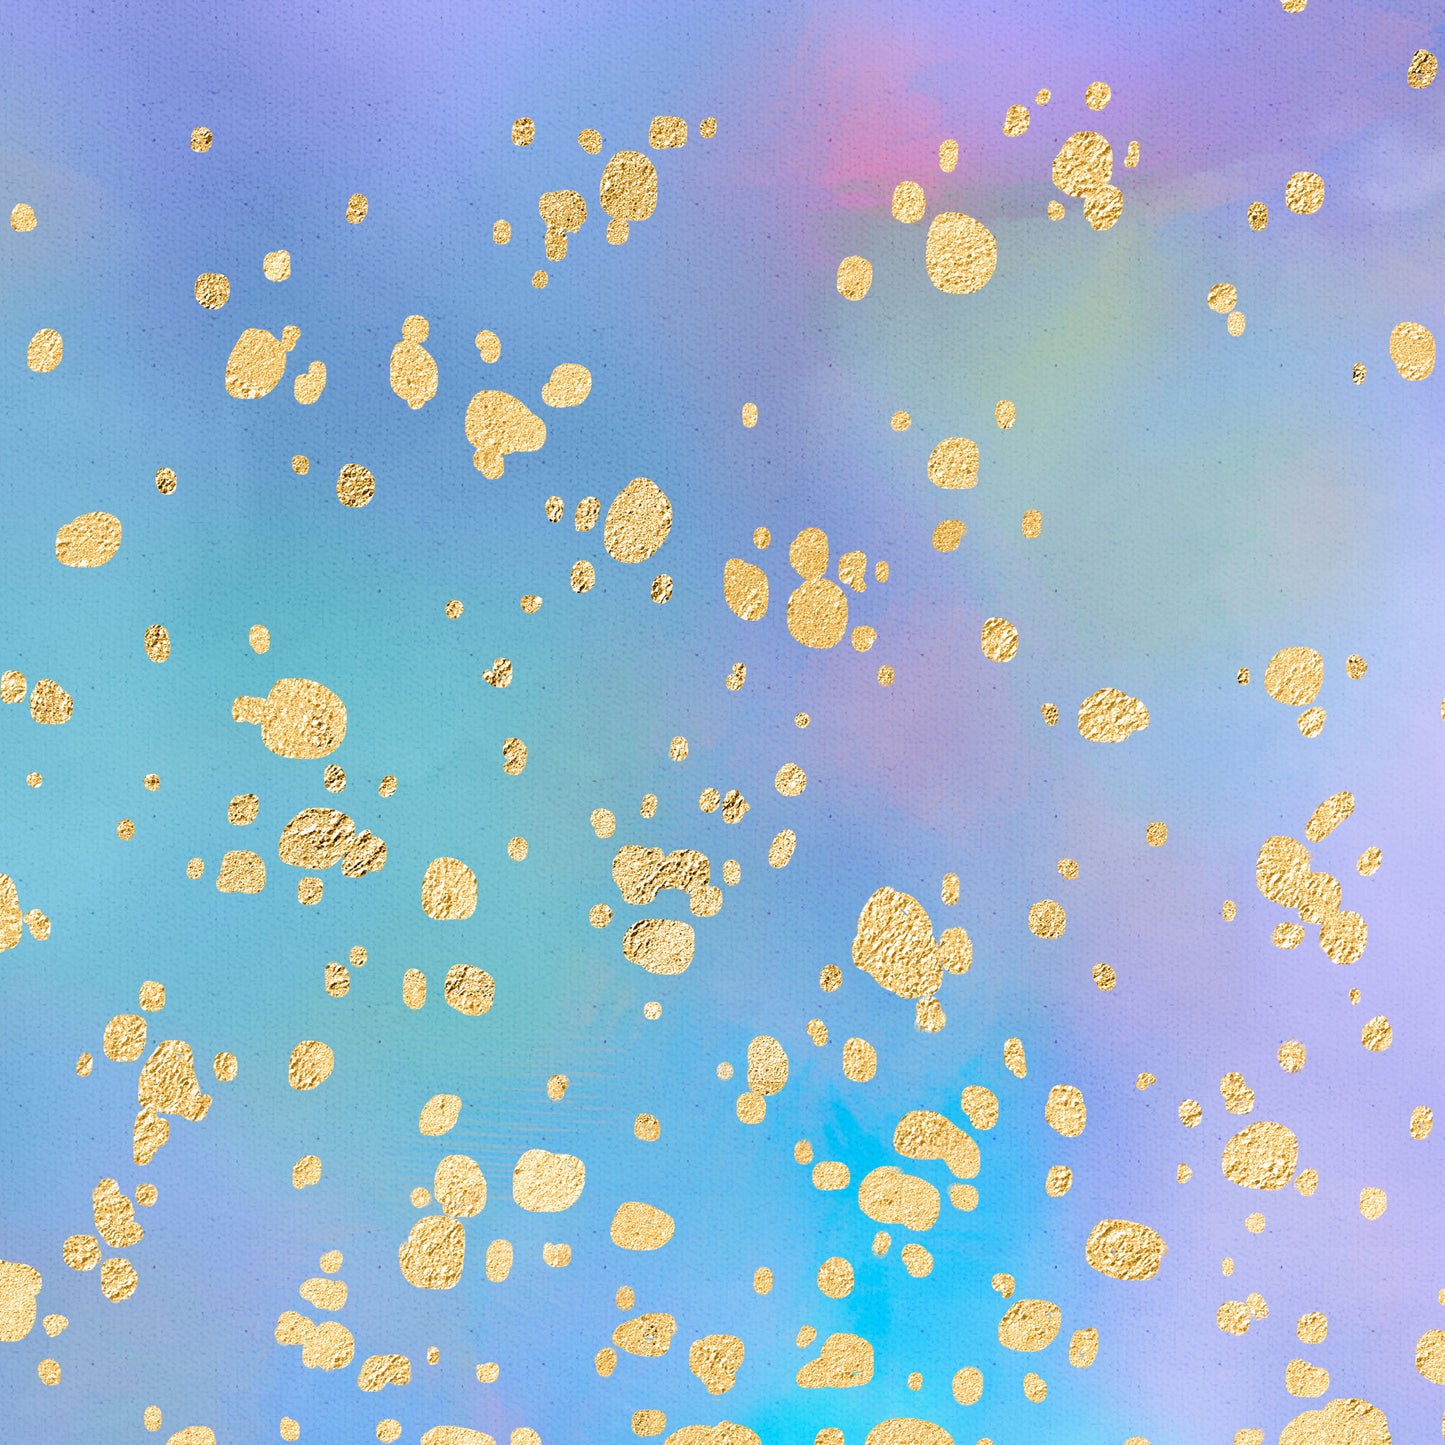 Rainbow Blue and Gold Splatter Up close